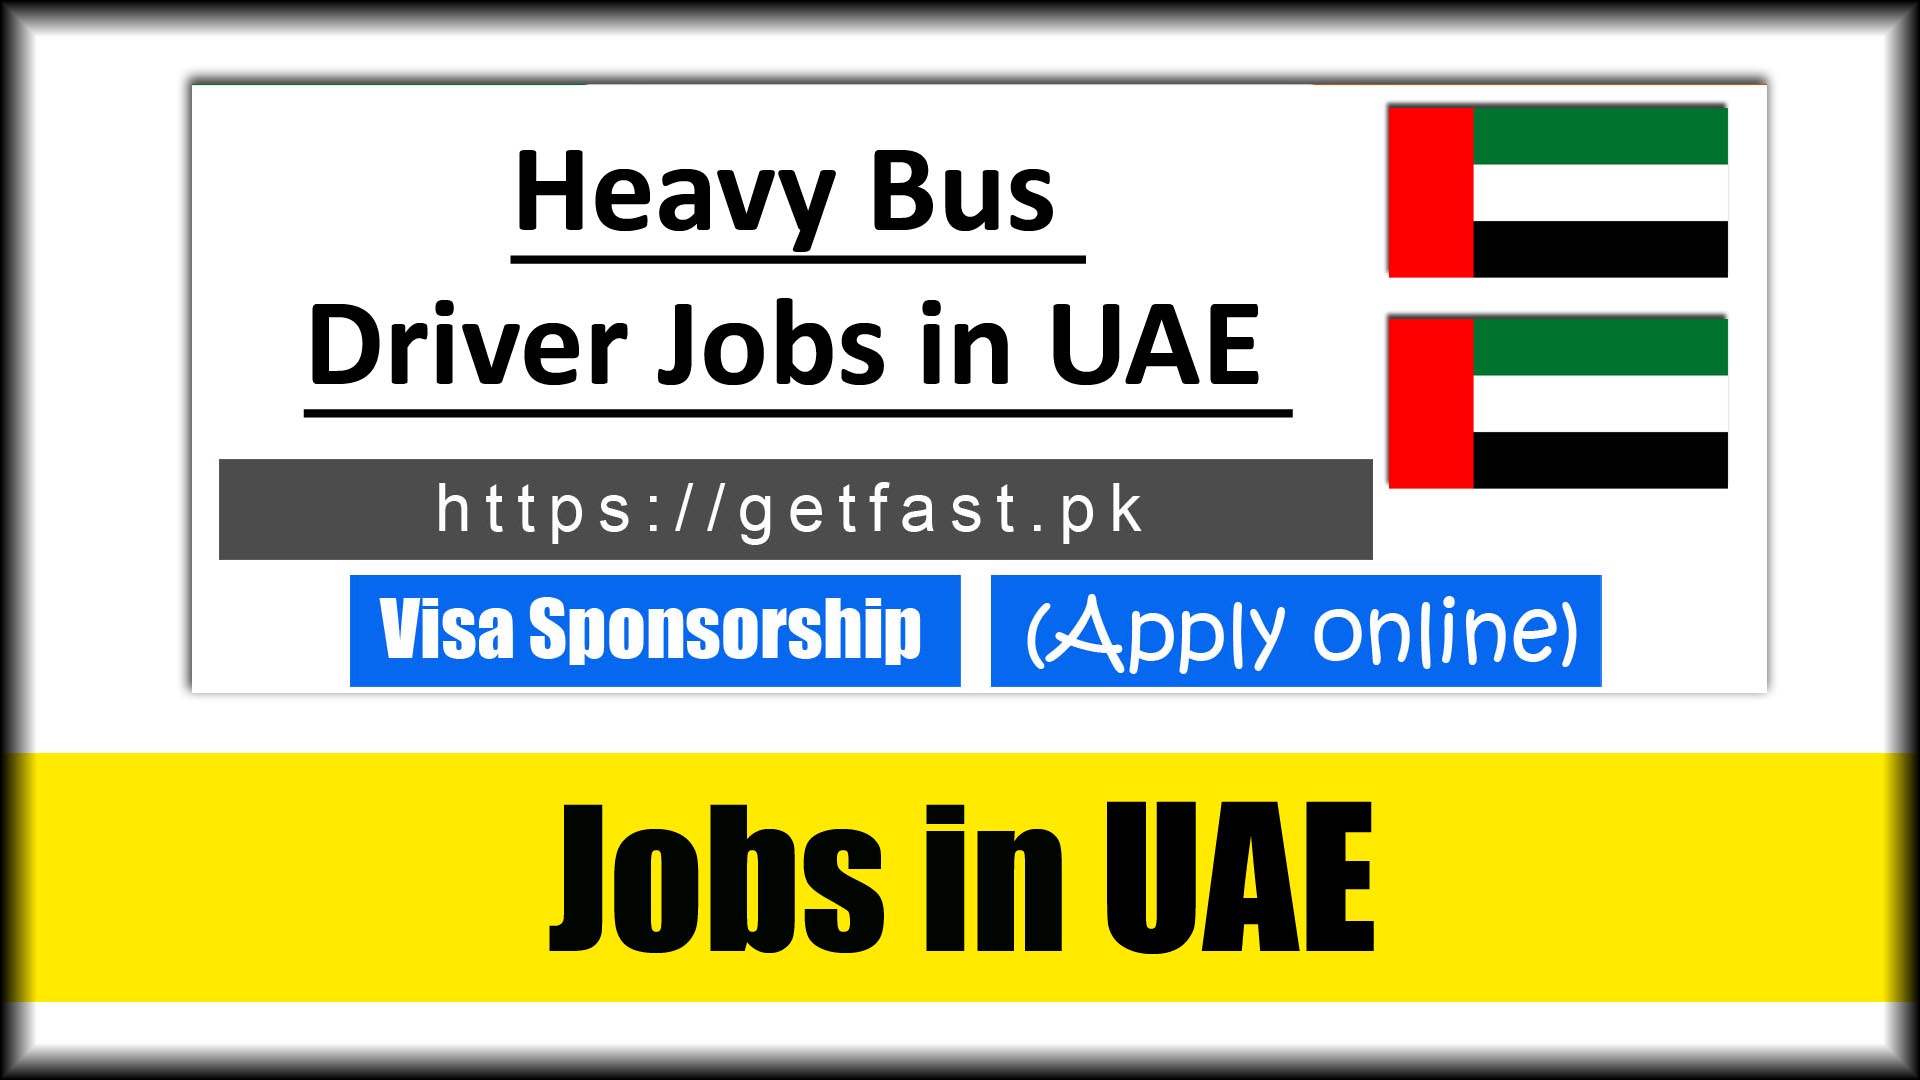 Heavy Bus Driver Jobs in UAE with visa sponsorship 2023 - Apply Online